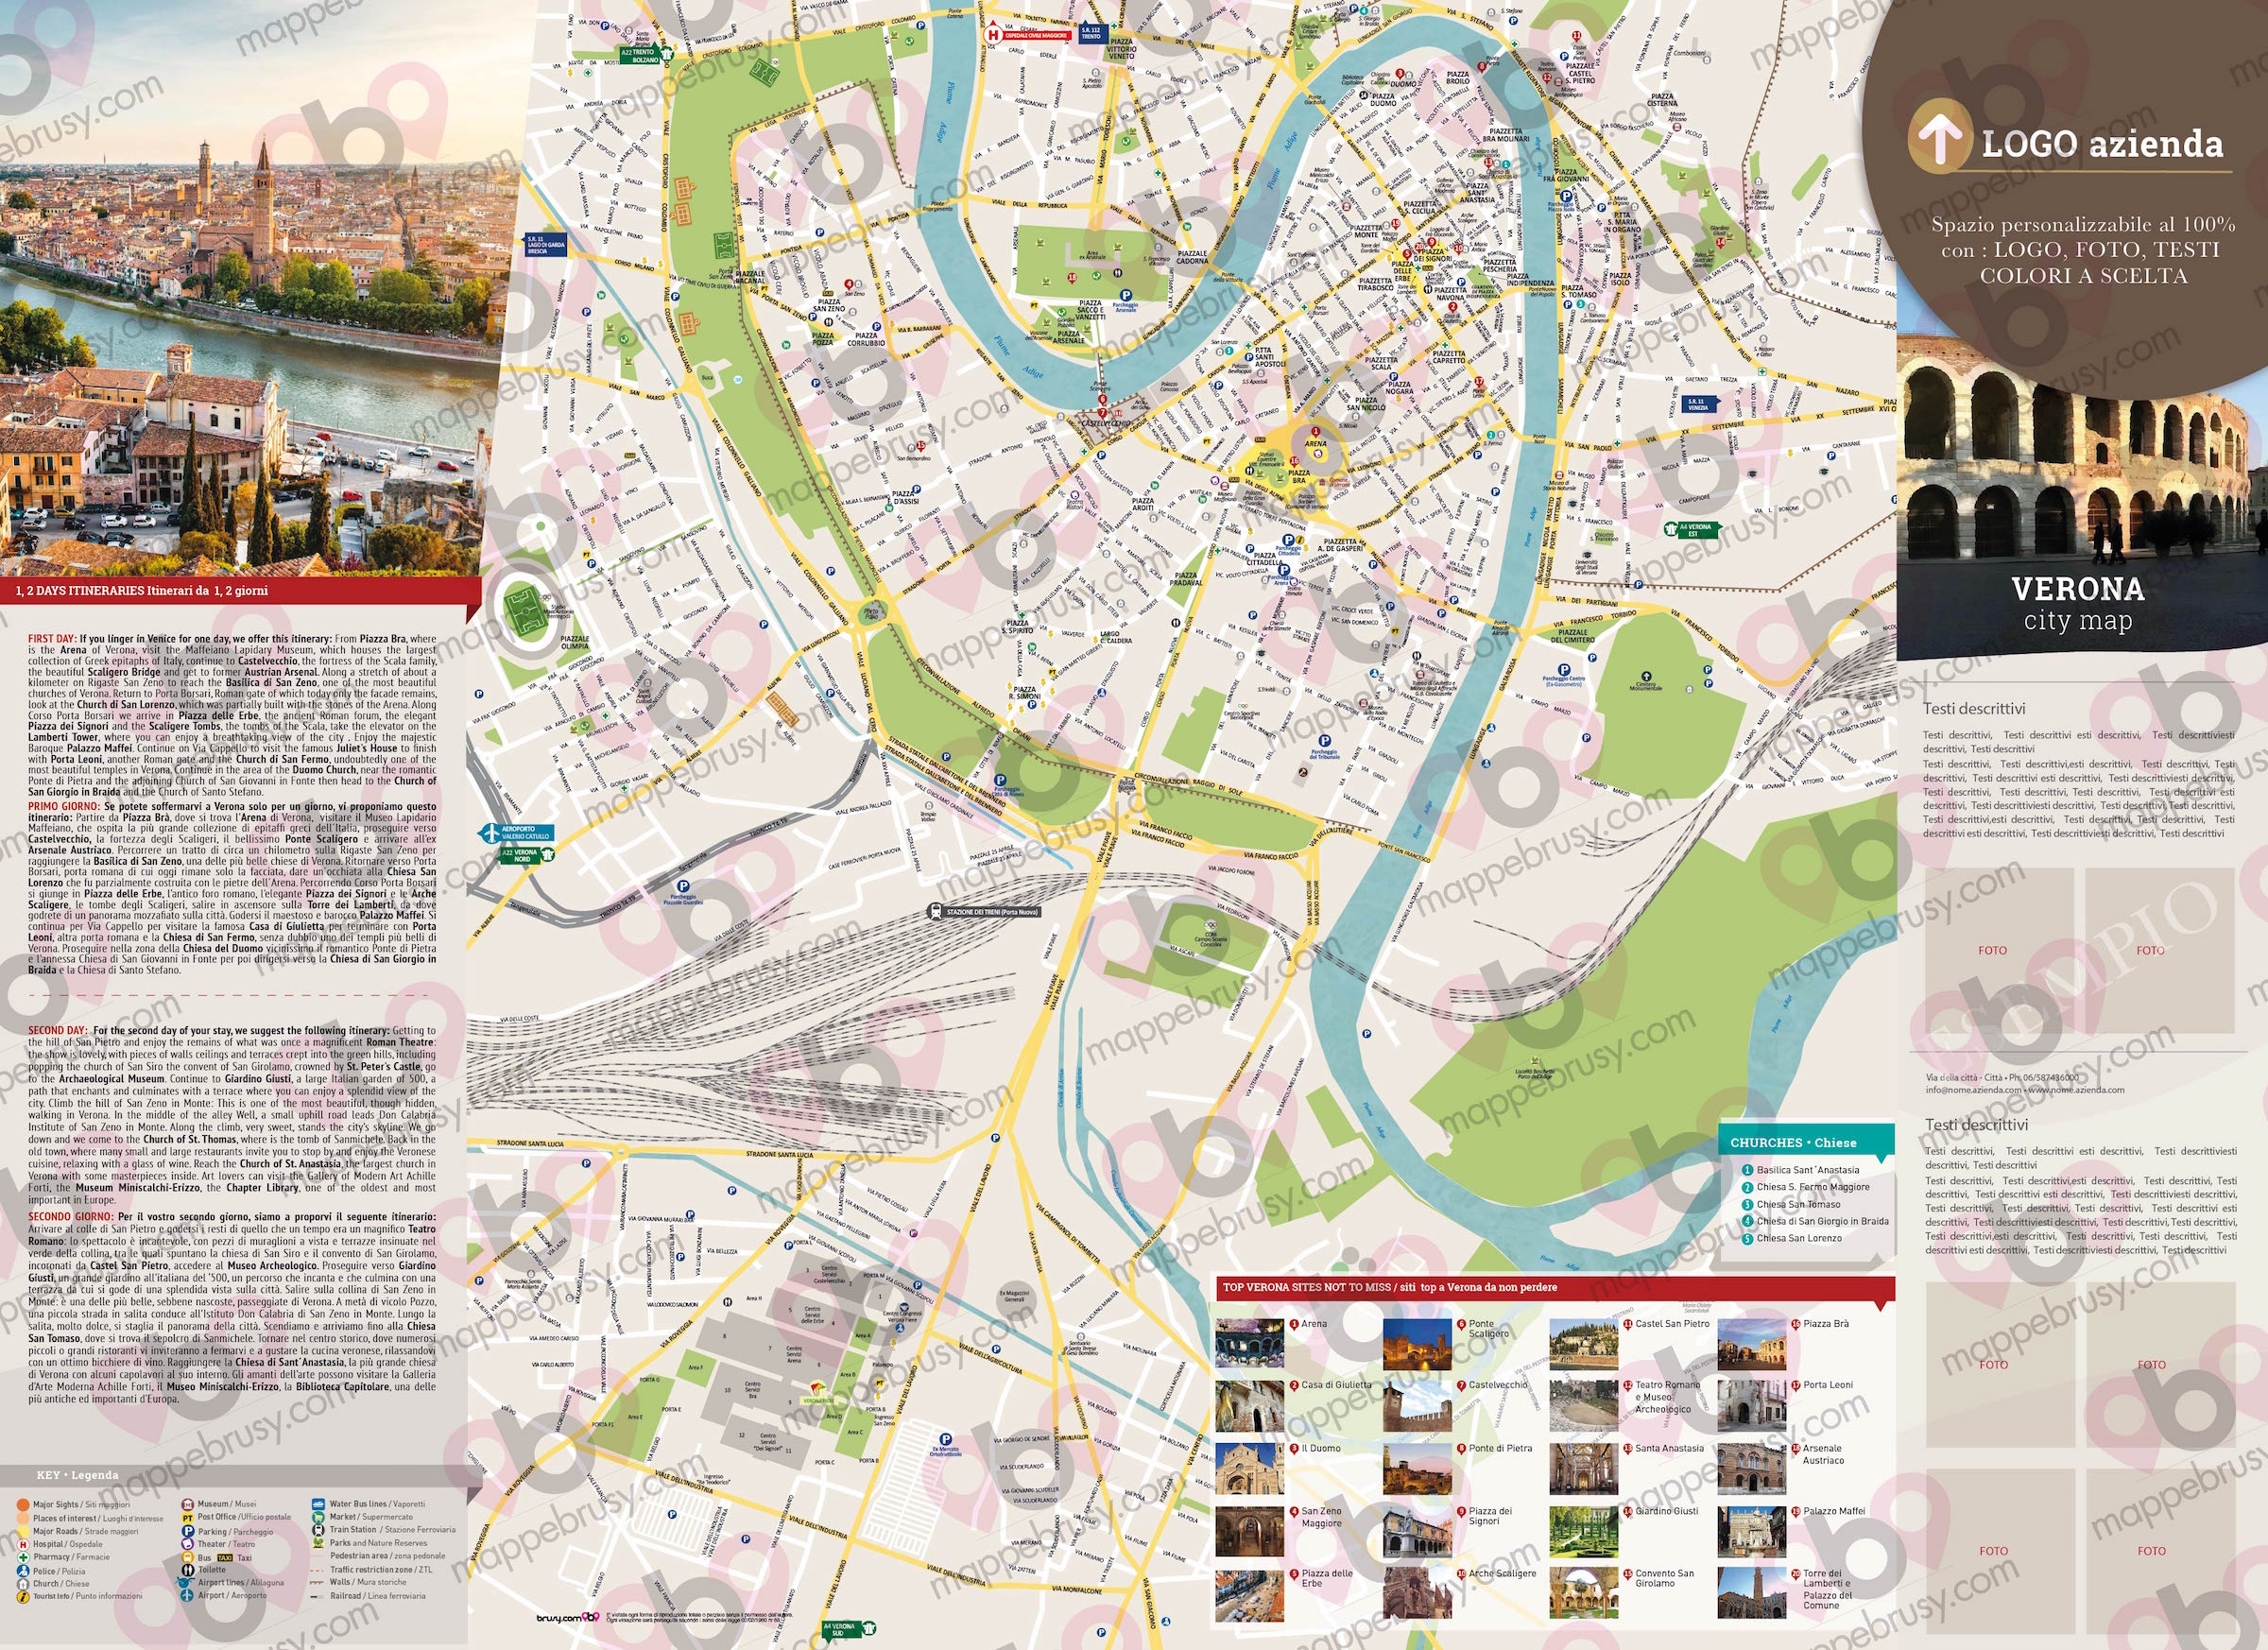 Mappa di Verona - Verona city map - mappa Verona - mappa personalizzata di Verona - mappa tursitica di Verona